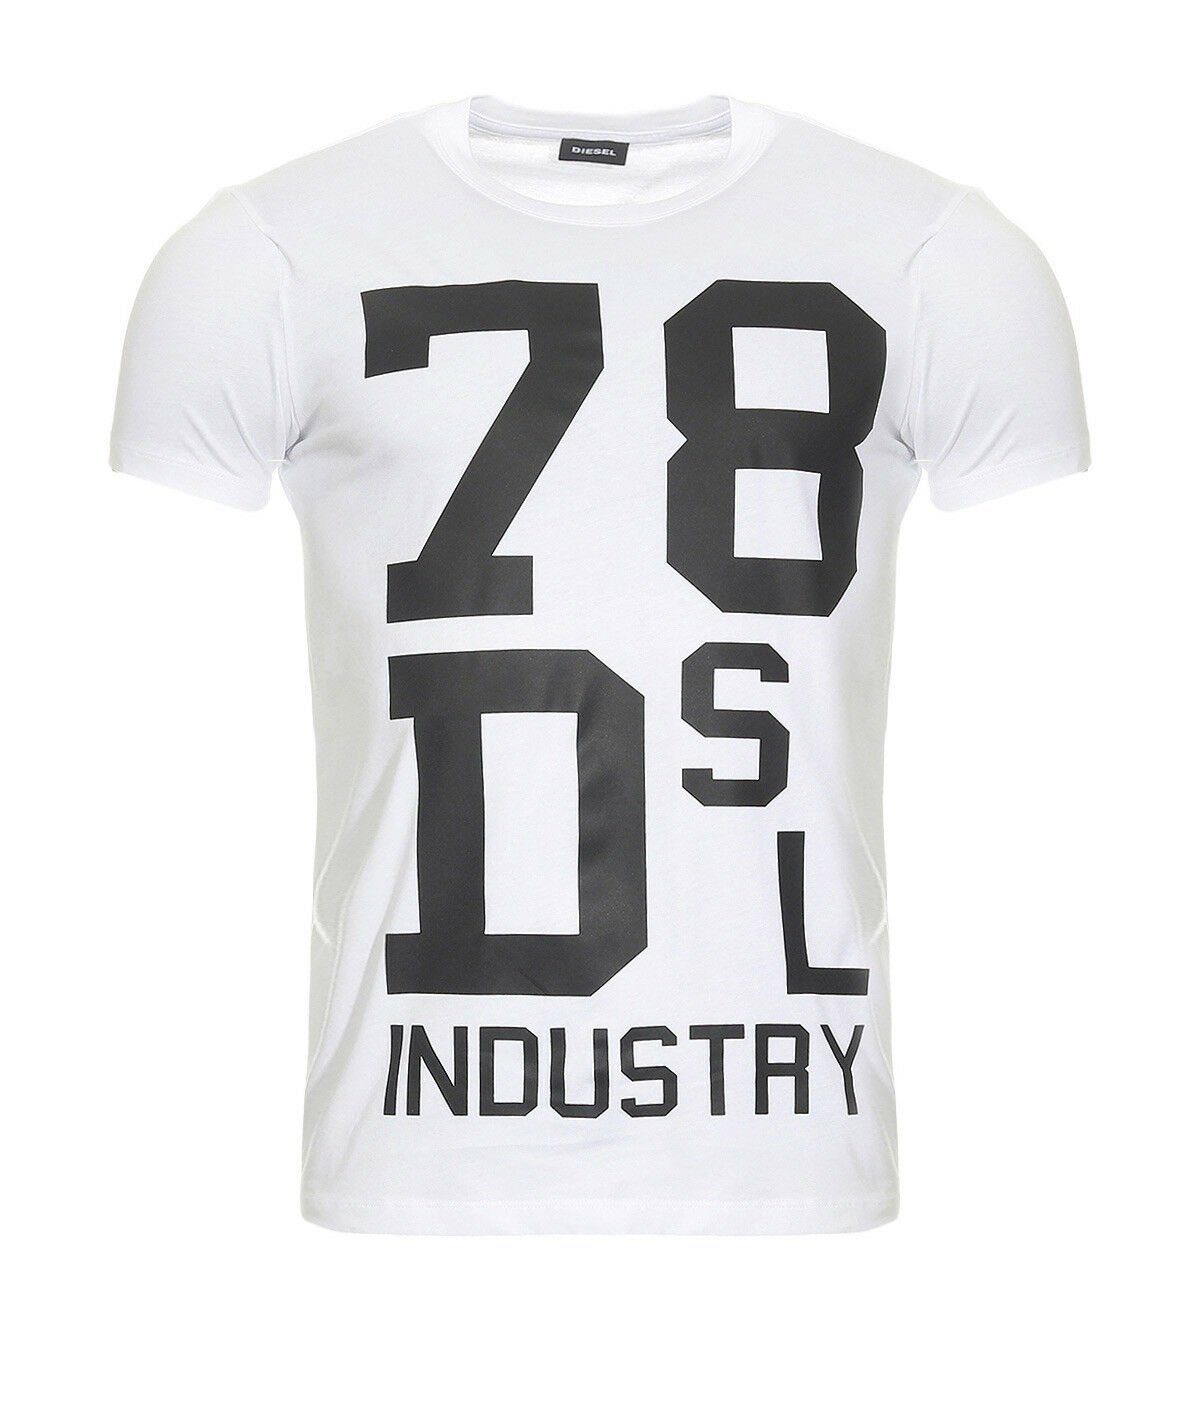 Herren T-DIEGO-ND Gerade Print-Schriftzug, Diesel Motiv Weiss Diesel T-Shirt Schnitt, T-Shirt